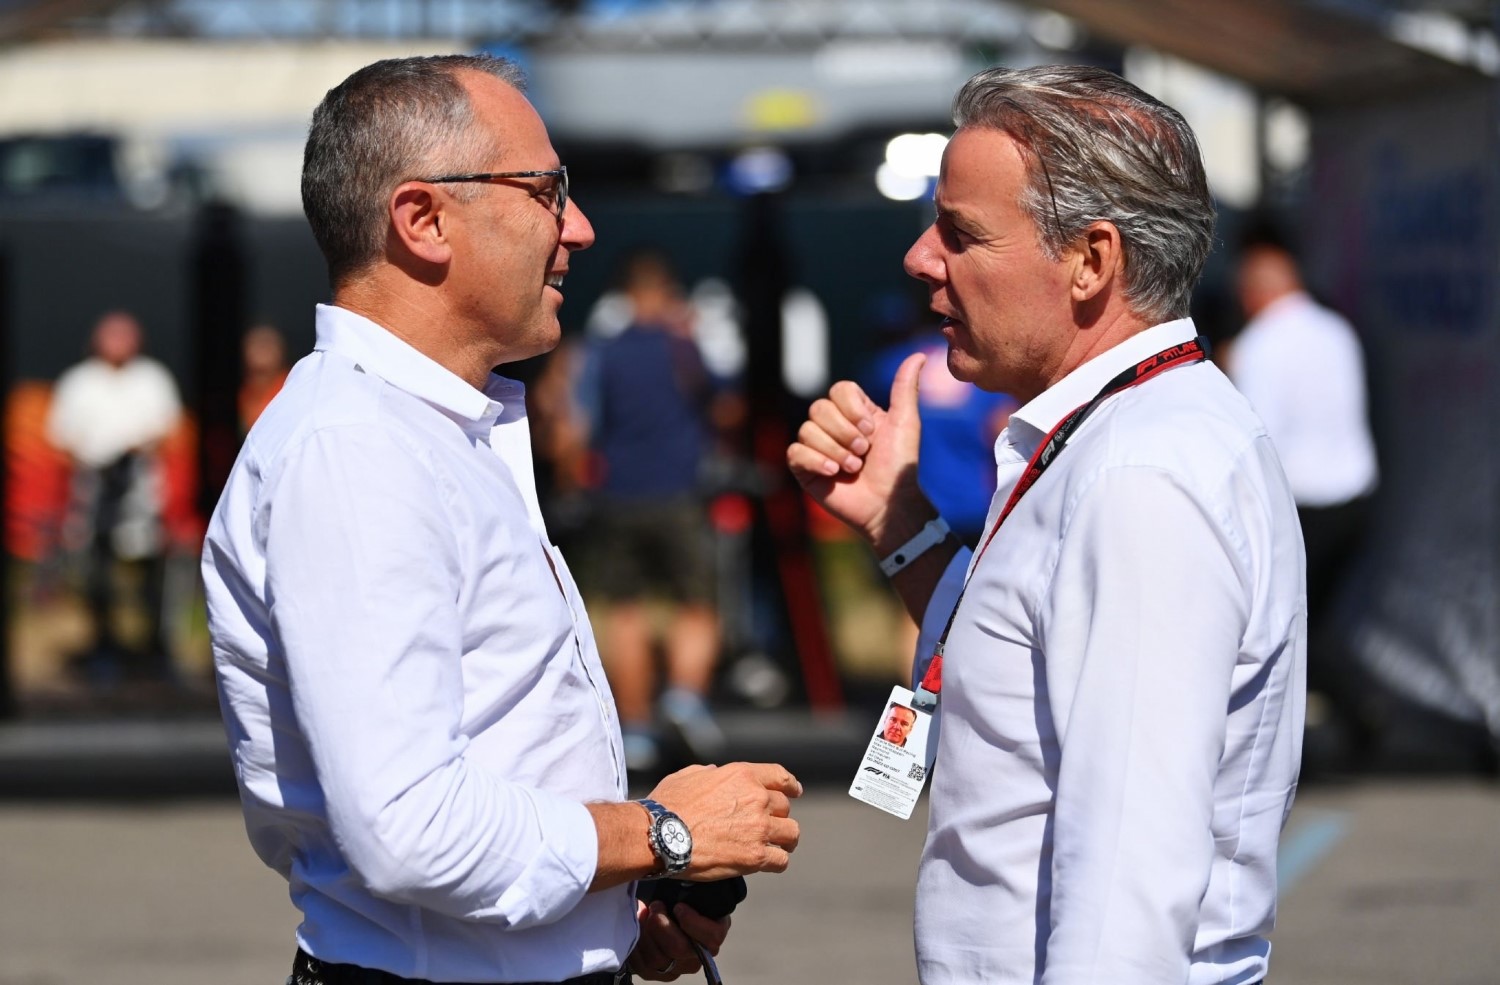 F1 CEO Stefano Domincali talks with Max Verstappen's manager Raymond Vermeulen